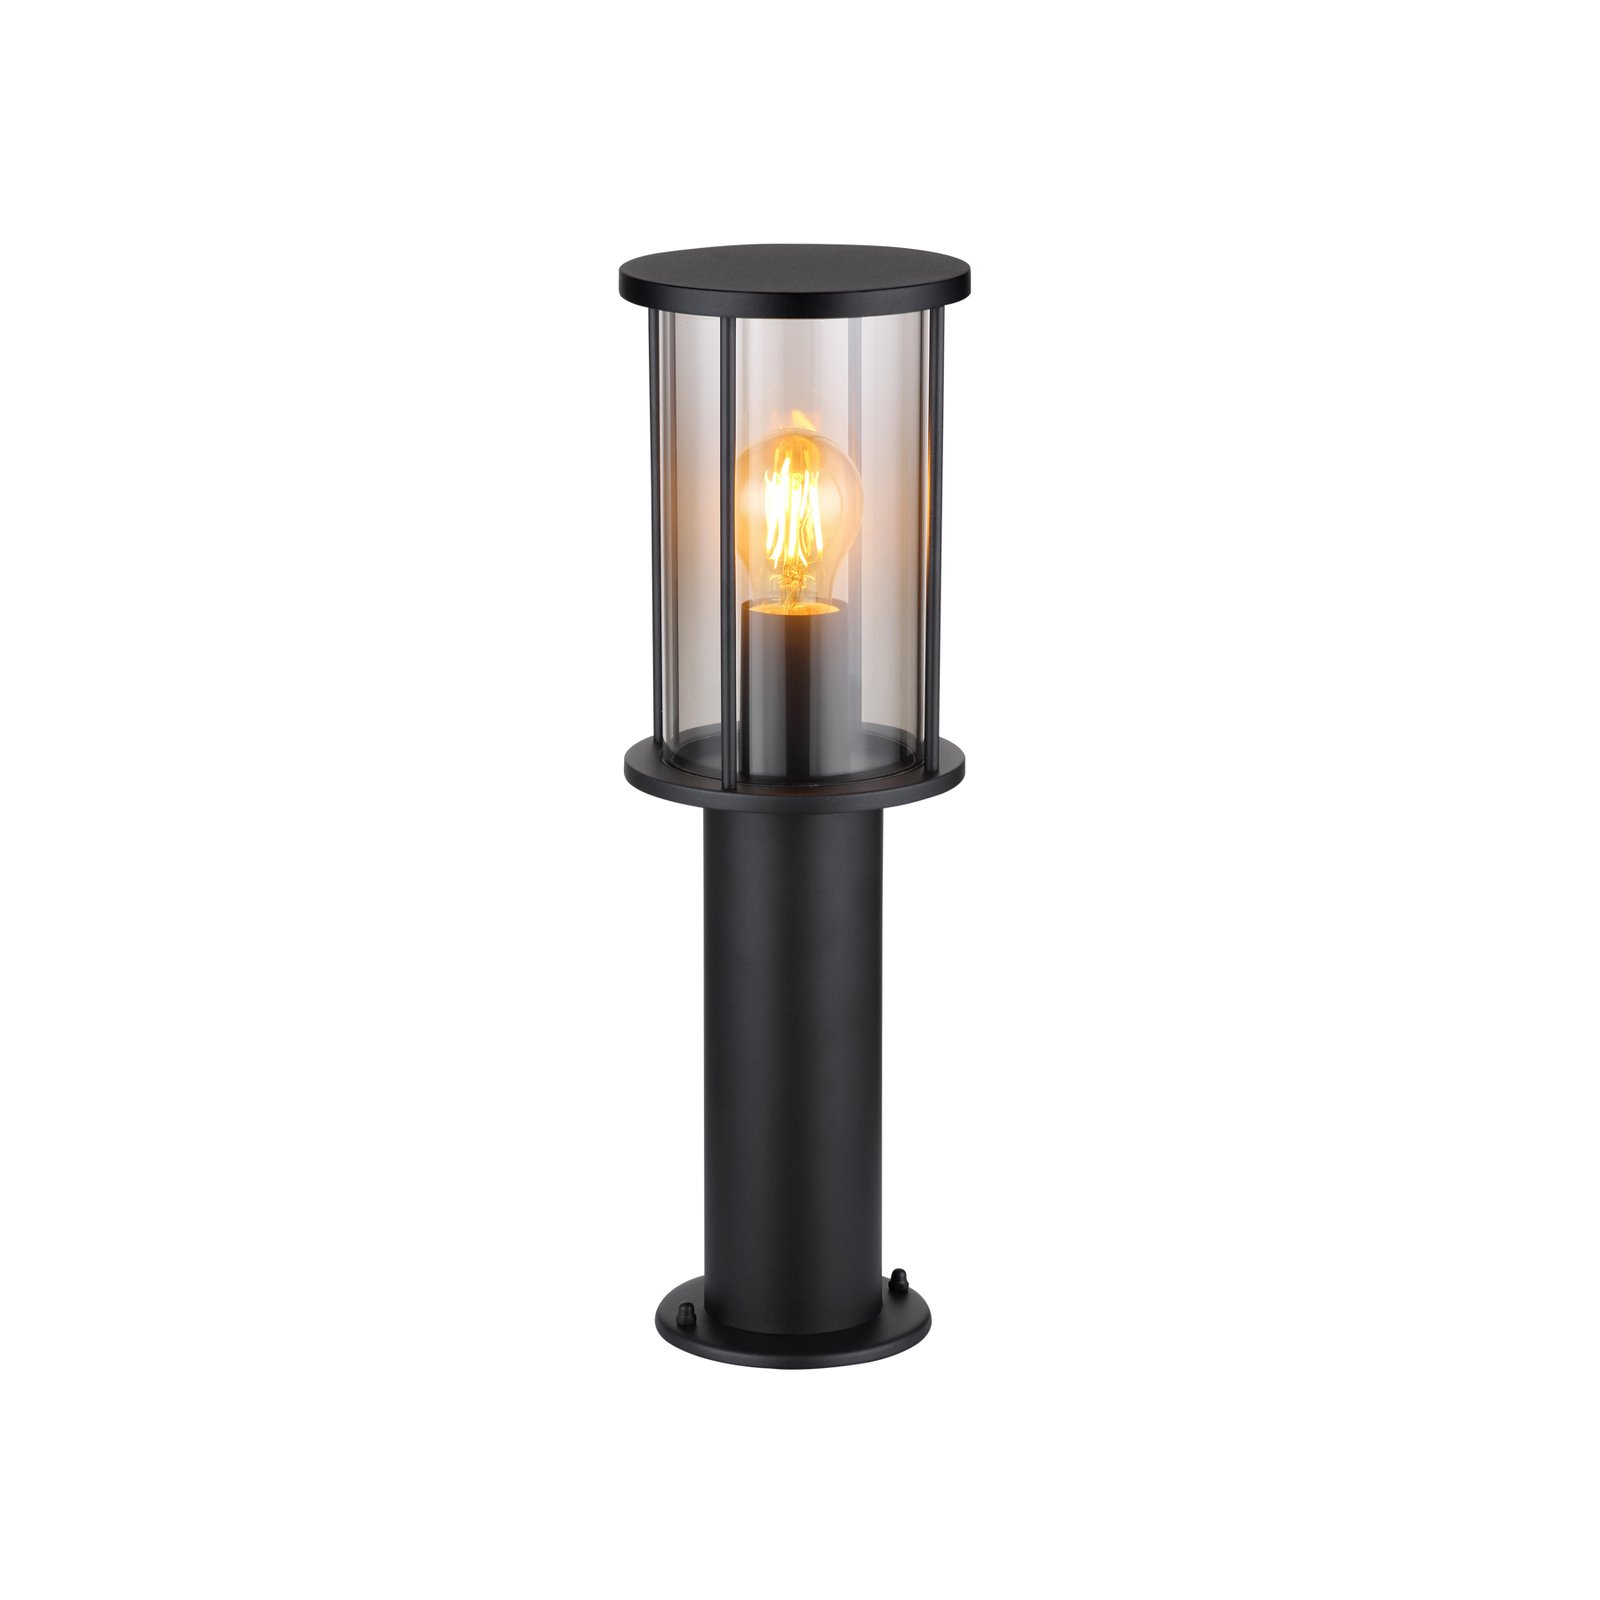 Gracey pillar light, height 45 cm, black, stainless steel, IP54